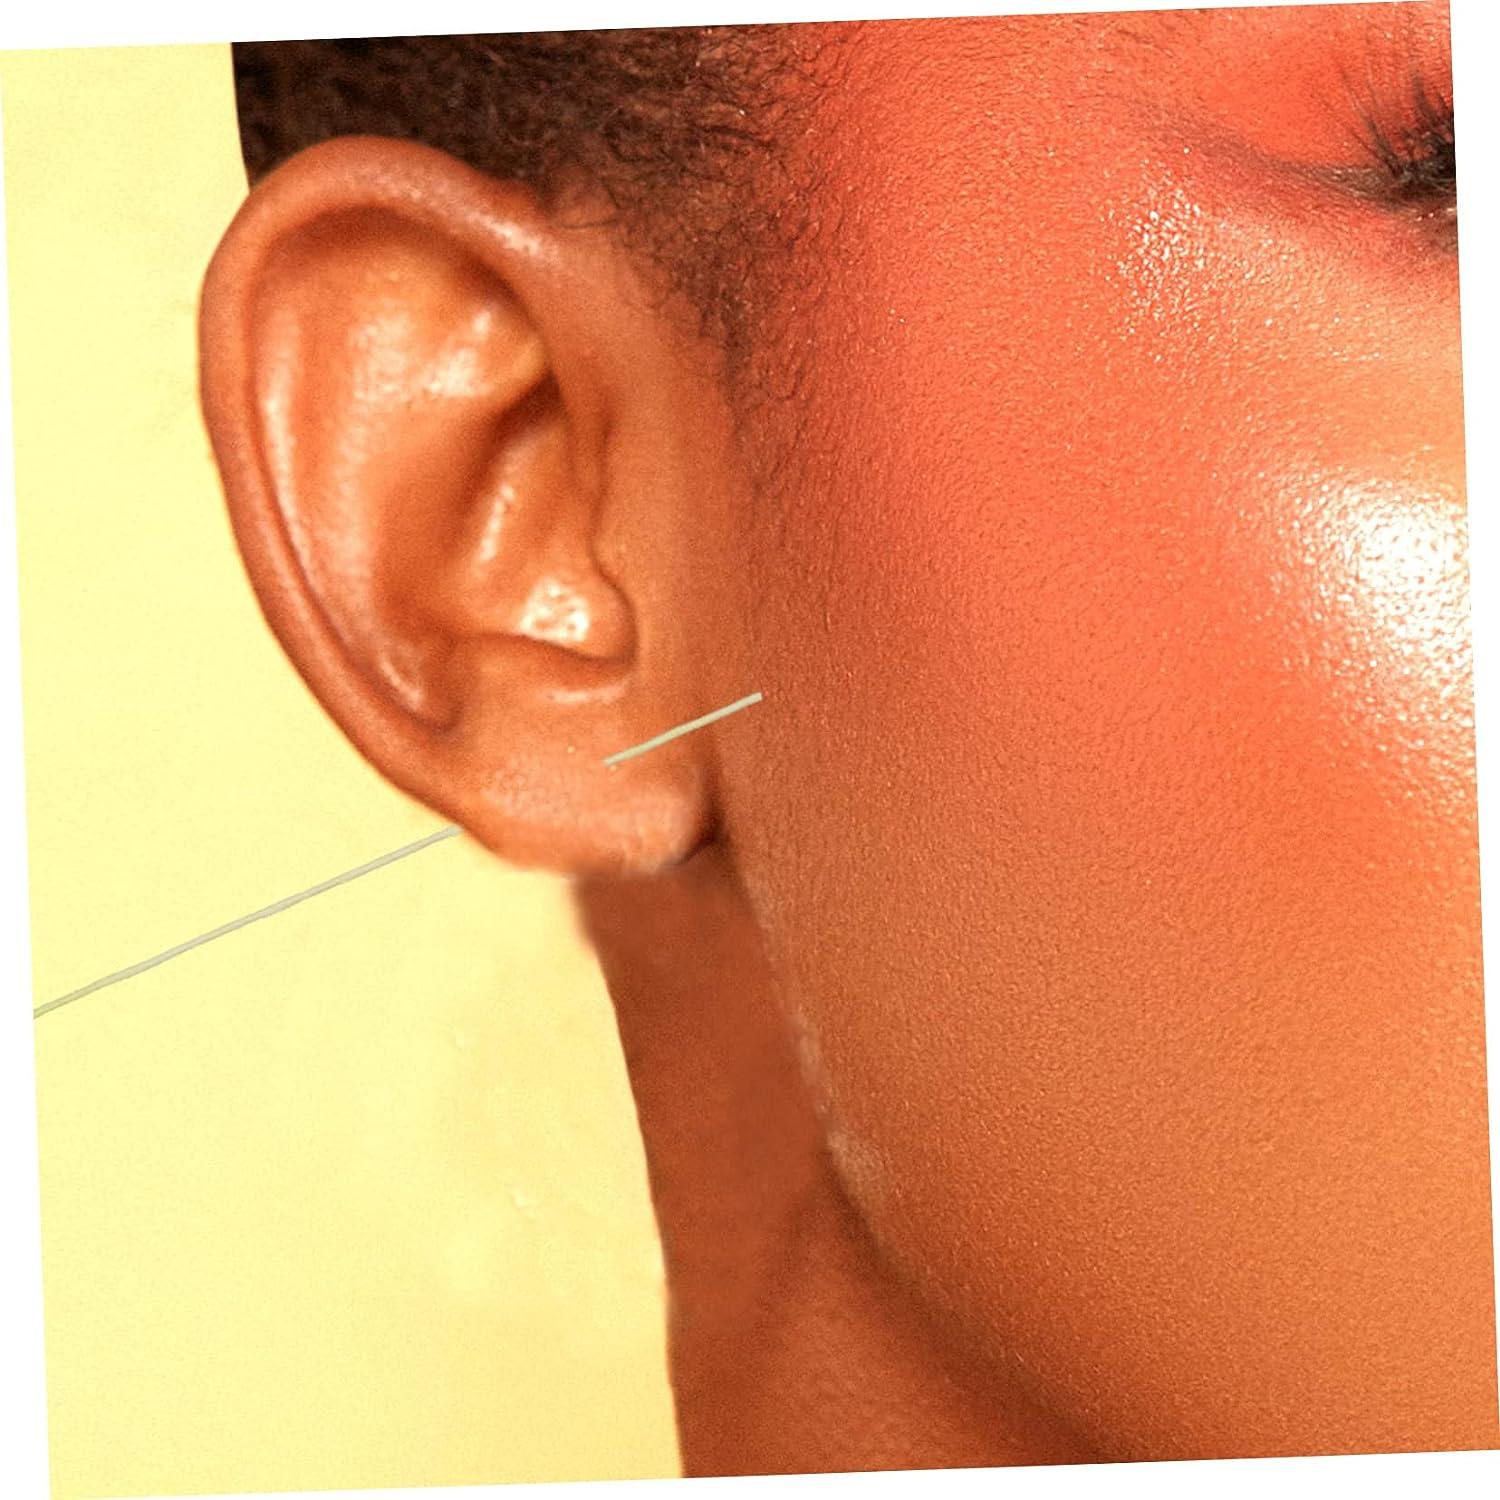 GLEAVI 1 Ear Piercing Cleaning Line Baby Ear Cleaner Baby Earrings